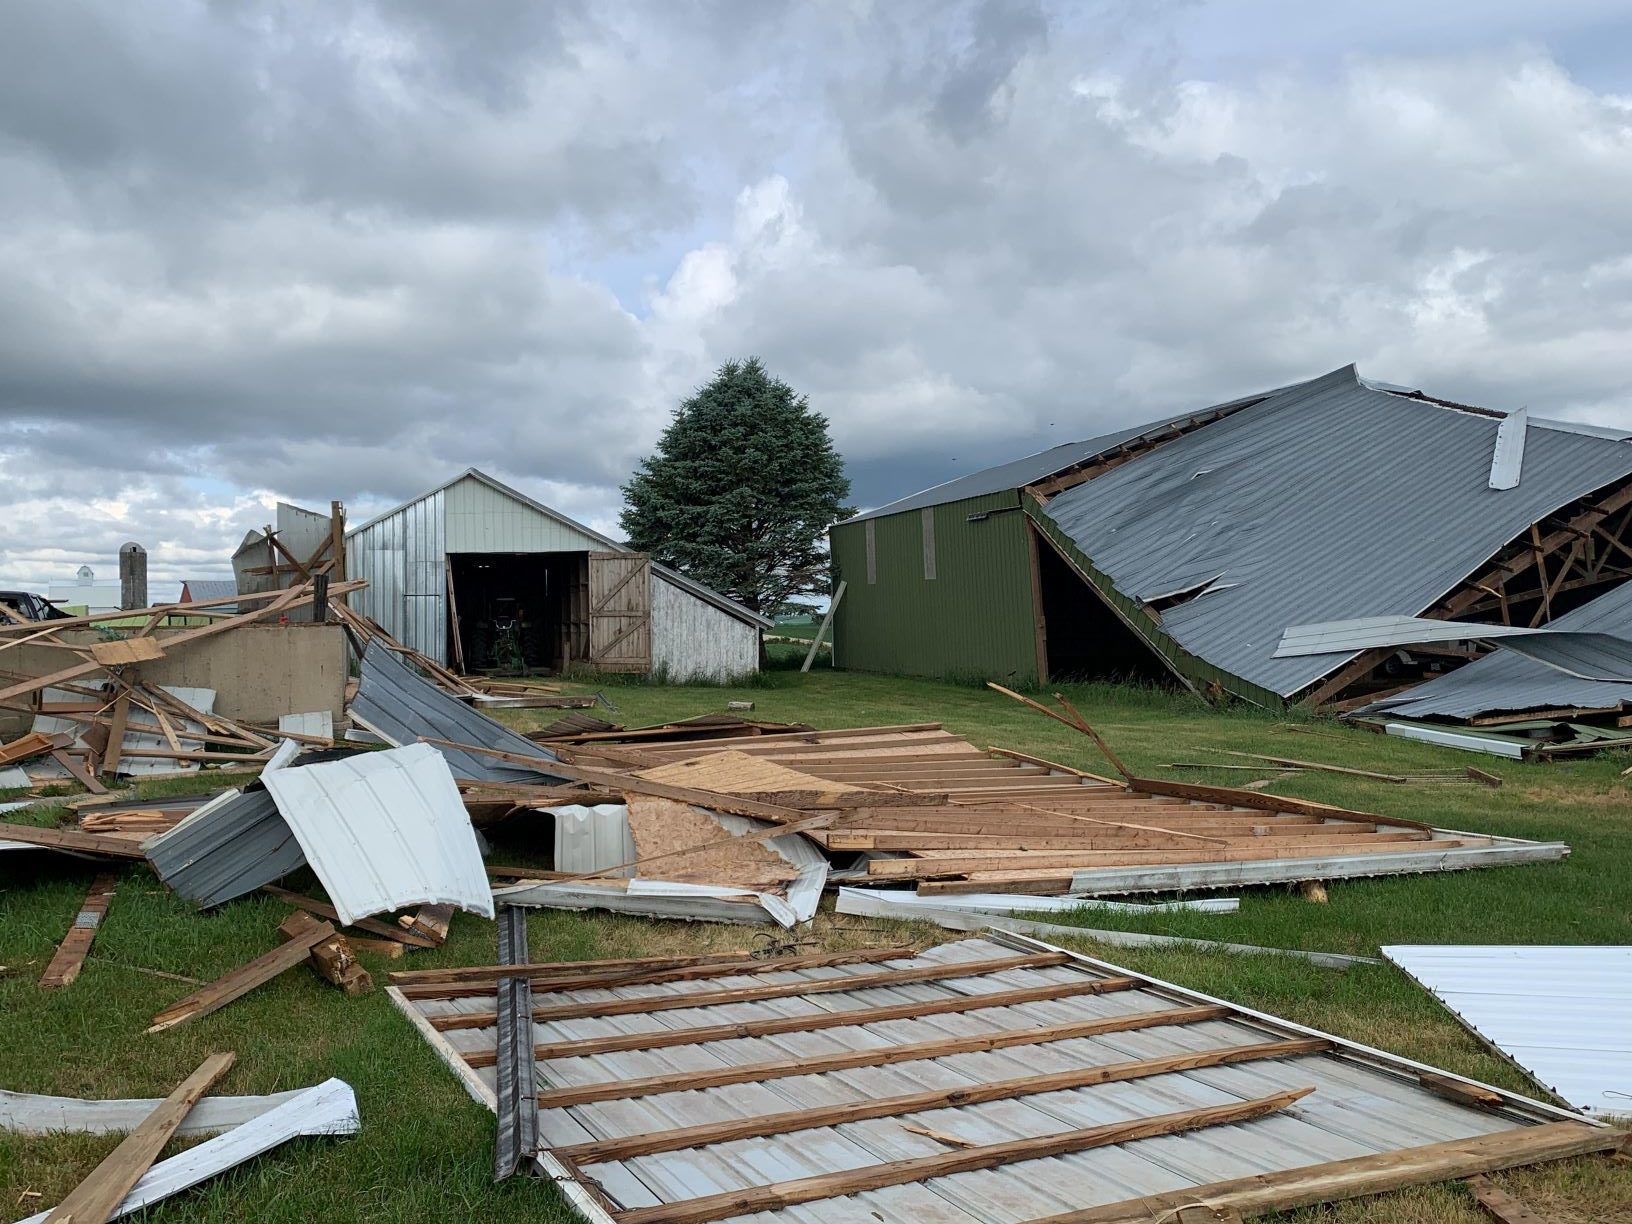 Tornadoes Confirmed in Pella and Bernard Iowa Sunday Evening